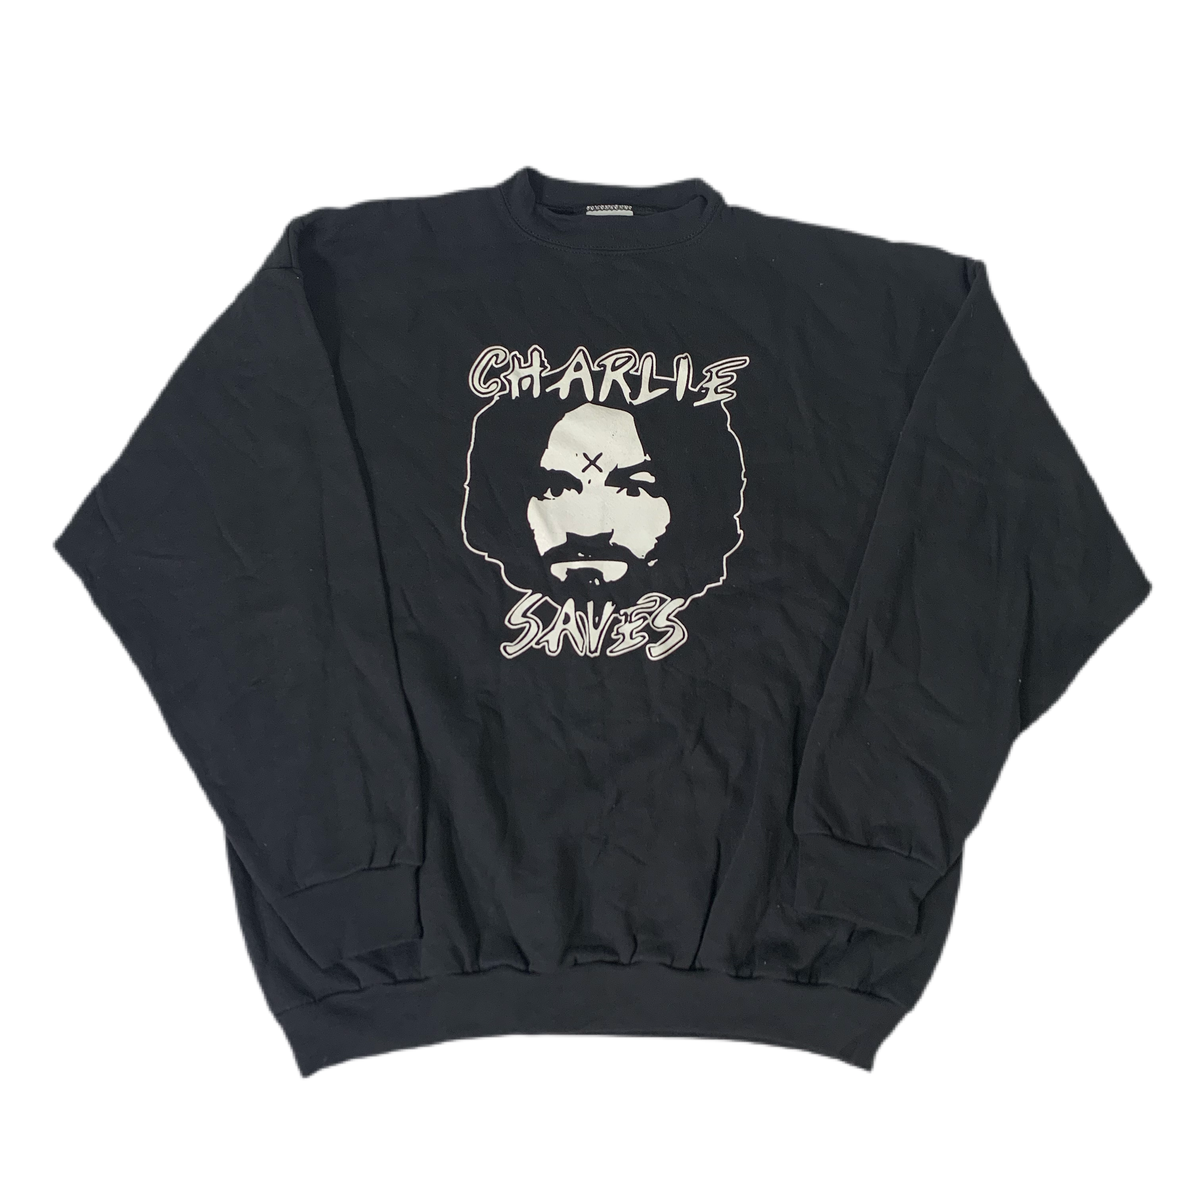 Vintage Charles Manson “Manson Saves” Manson Family Crewneck Sweatshirt